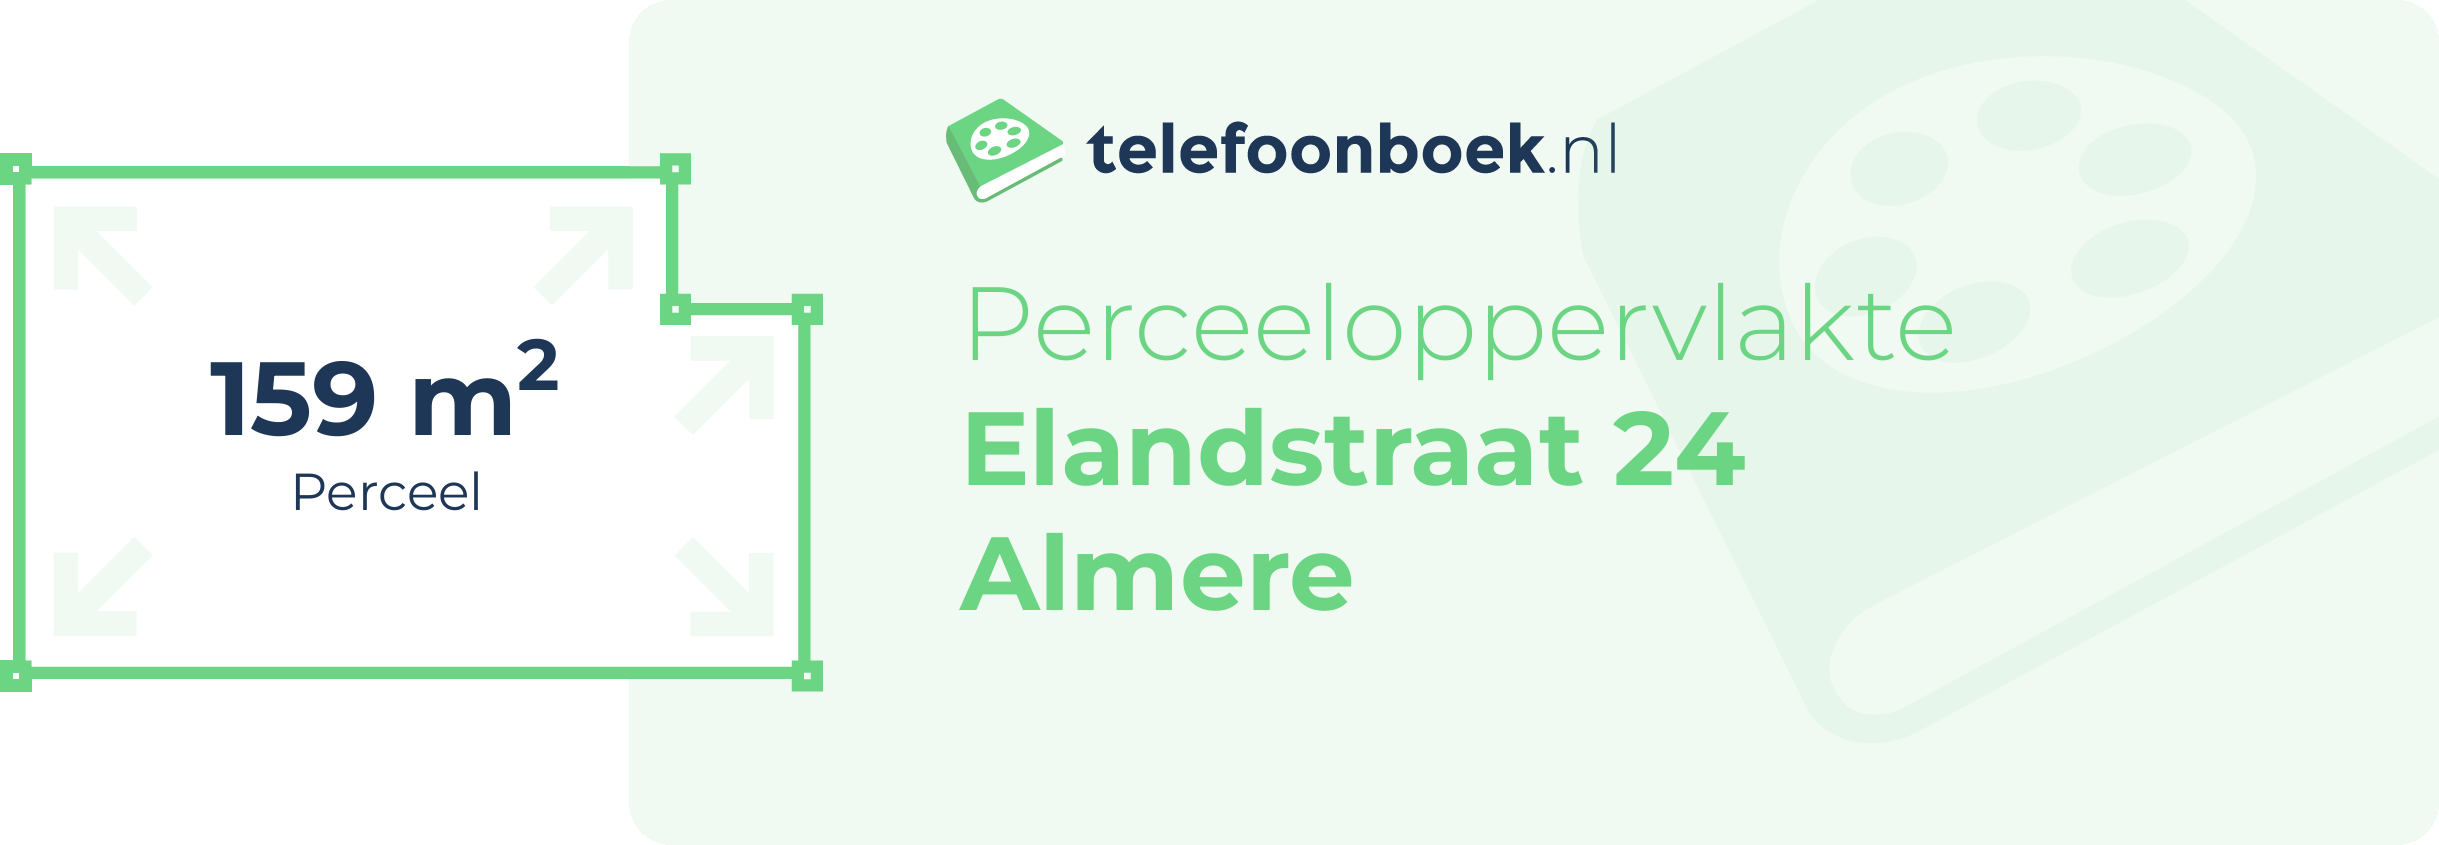 Perceeloppervlakte Elandstraat 24 Almere